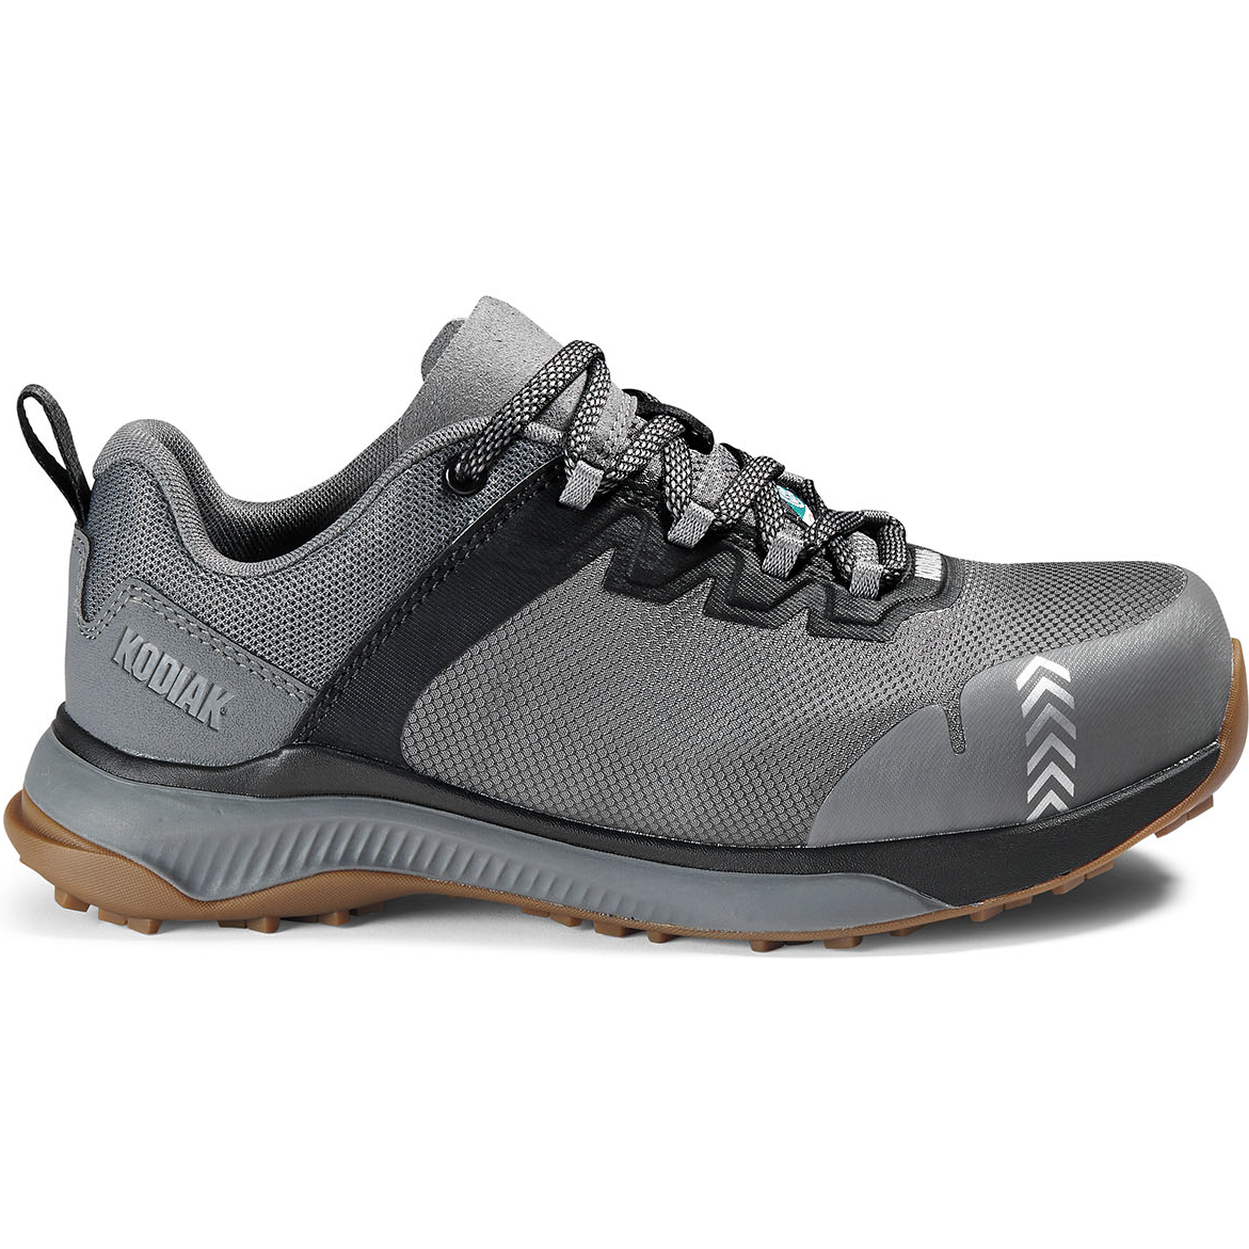 Kodiak Women's Quicktrail Low CT Athletic Safety Work Shoe -Gray- 4TGXGY 5 / Medium / Gray - Overlook Boots